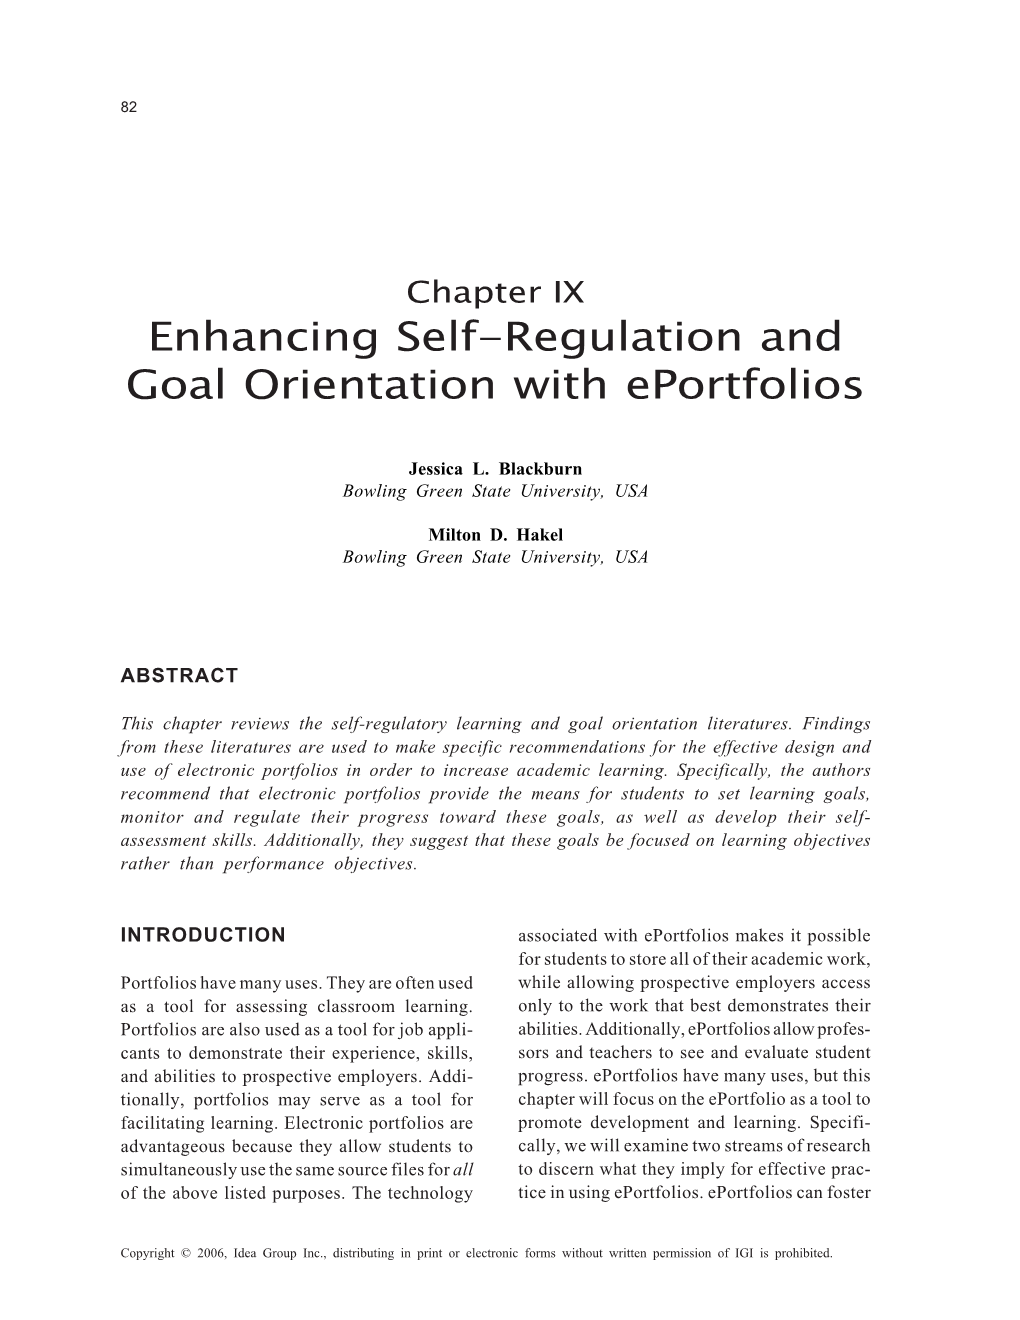 Enhancing Self-Regulation and Goal Orientation with Eportfolios